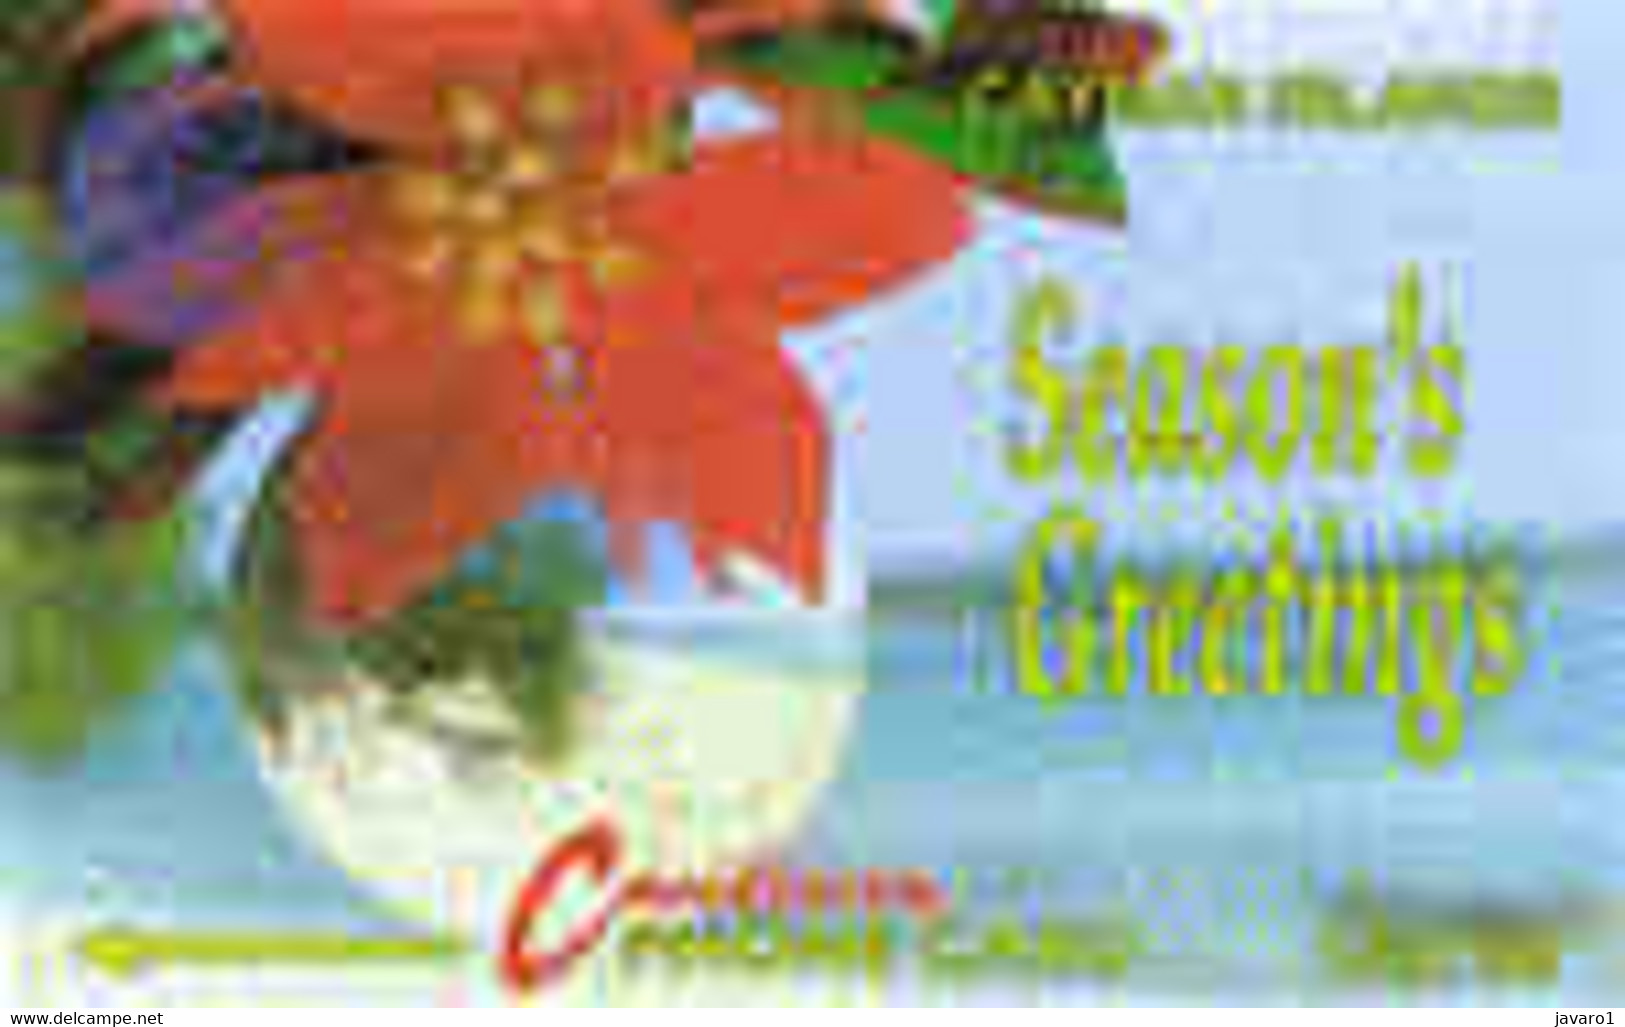 CAYMAN : 004A CI$7.50 Seasons Greetings 1992 USED - Kaaimaneilanden